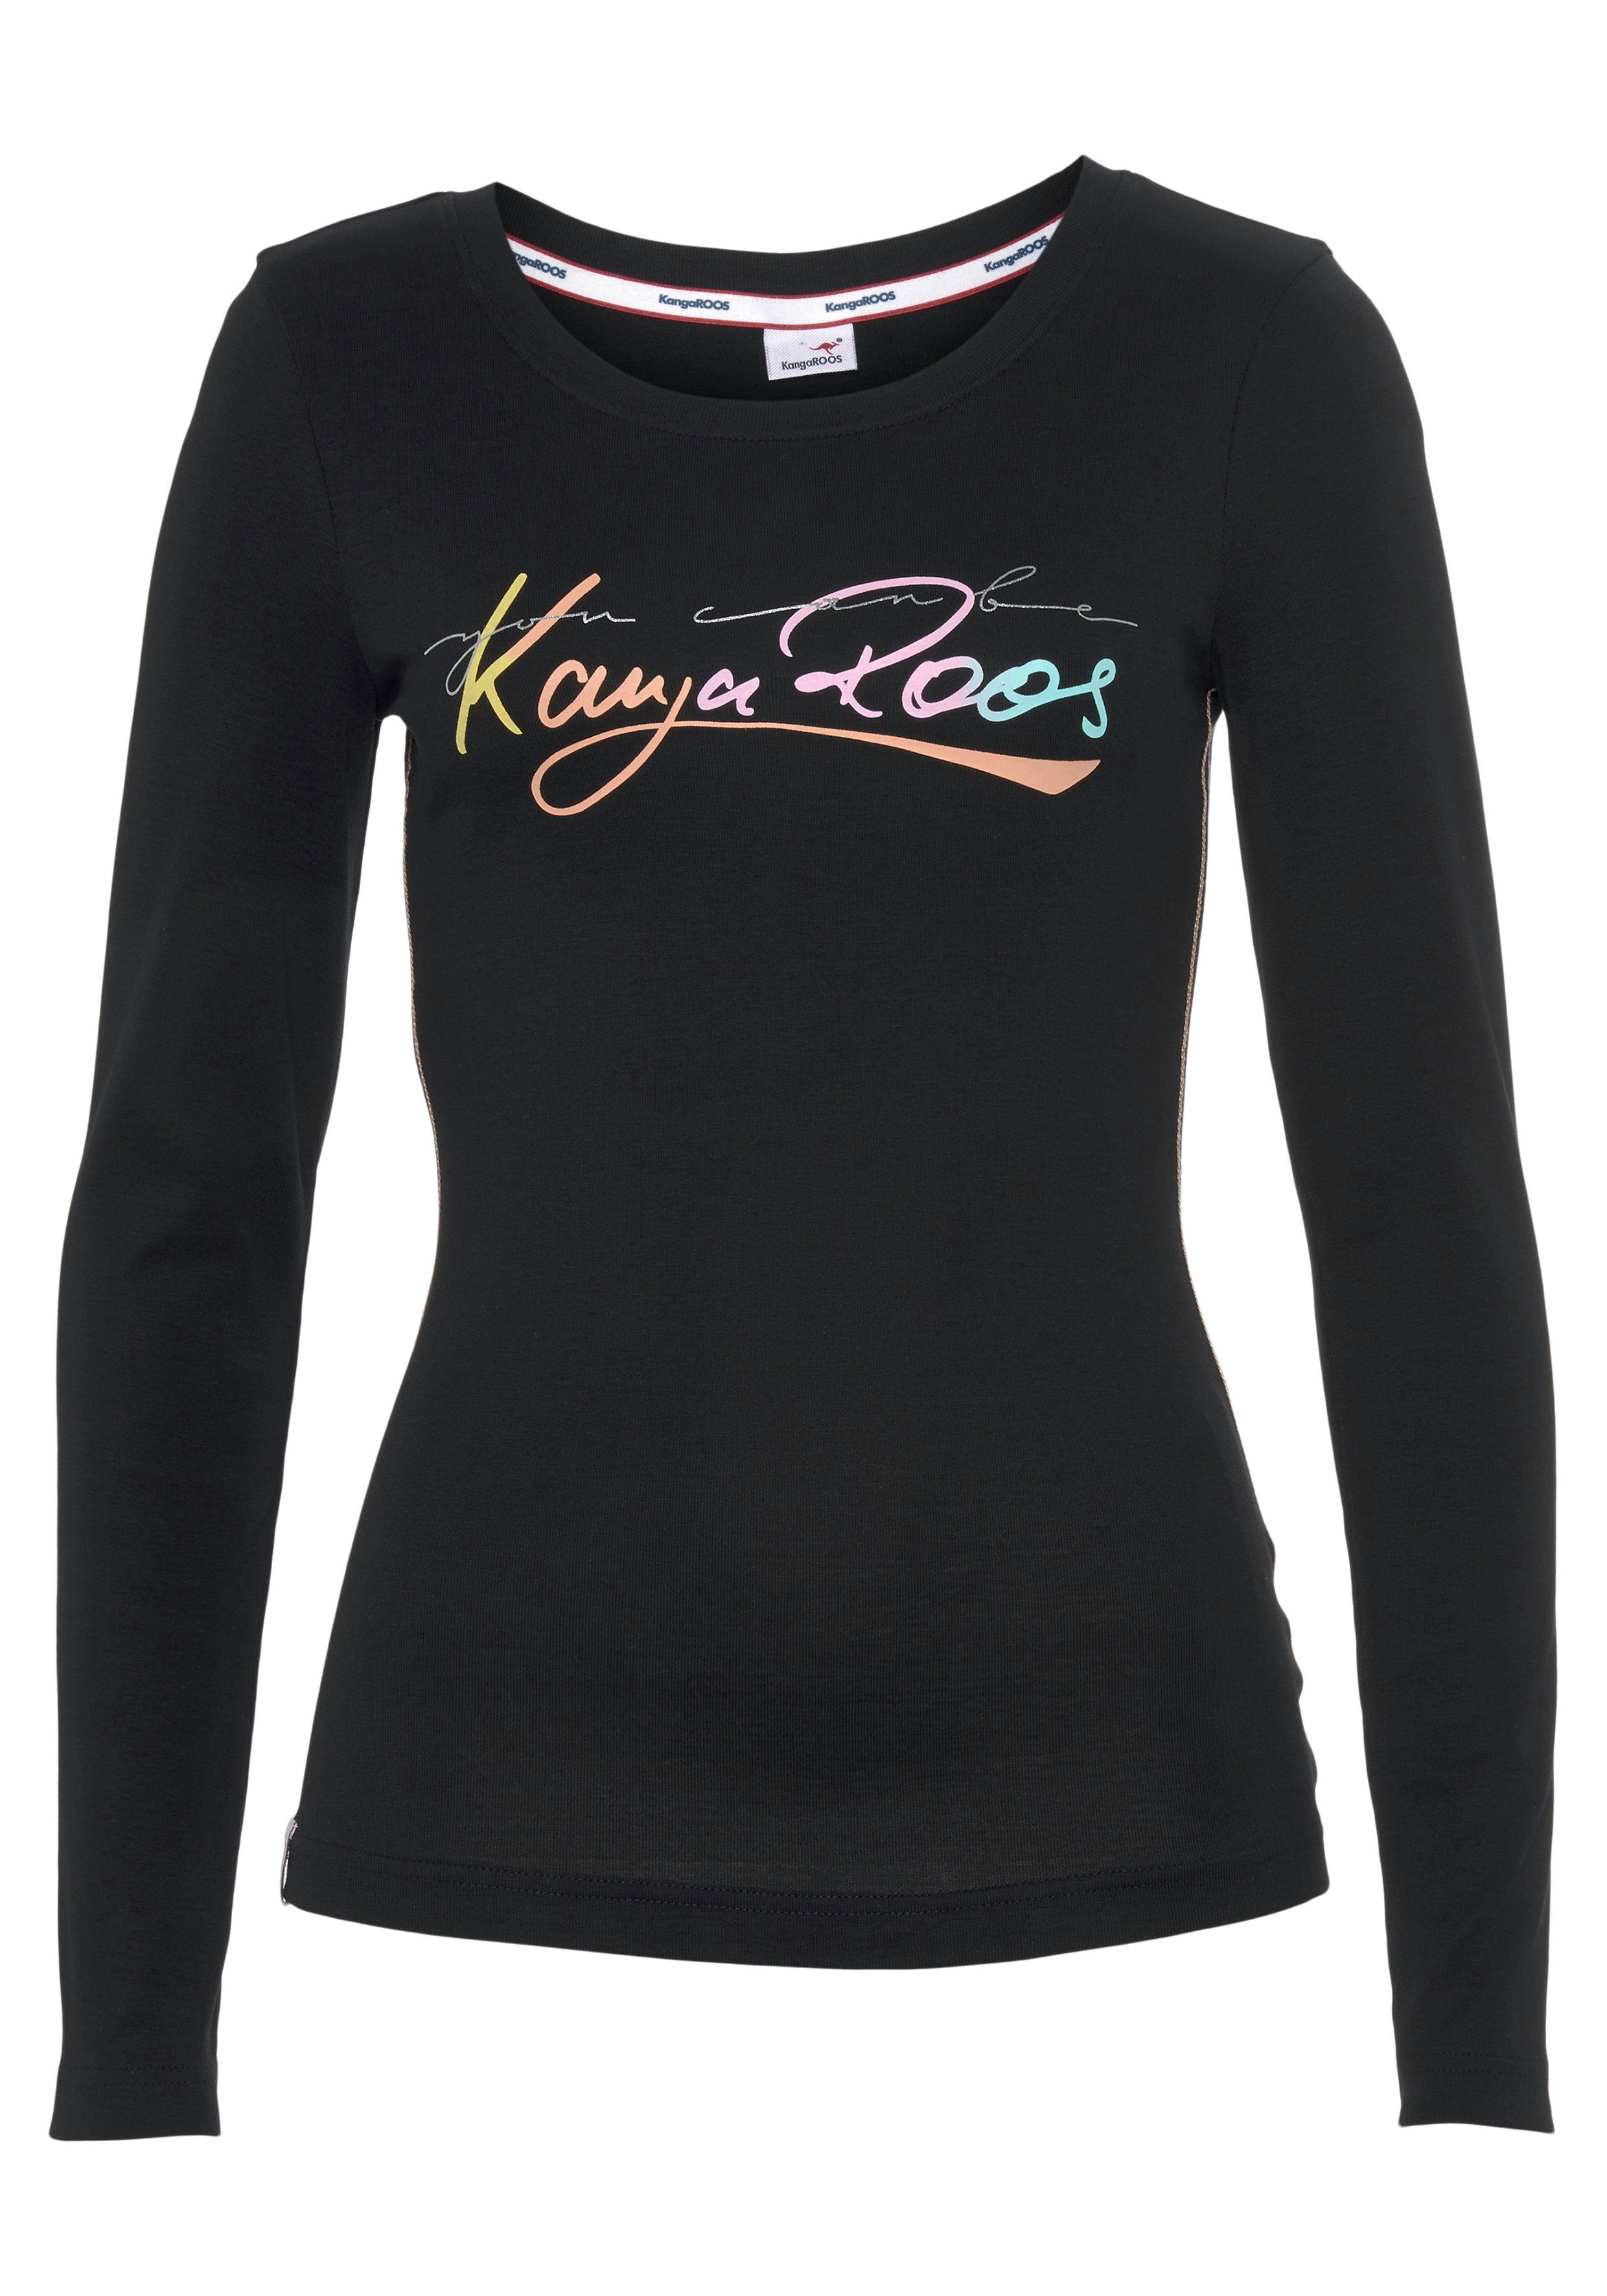 KangaROOS Langarmshirt mit trendig farbigen Logoschriftzug schwarz NEUE KOLLEKTION 